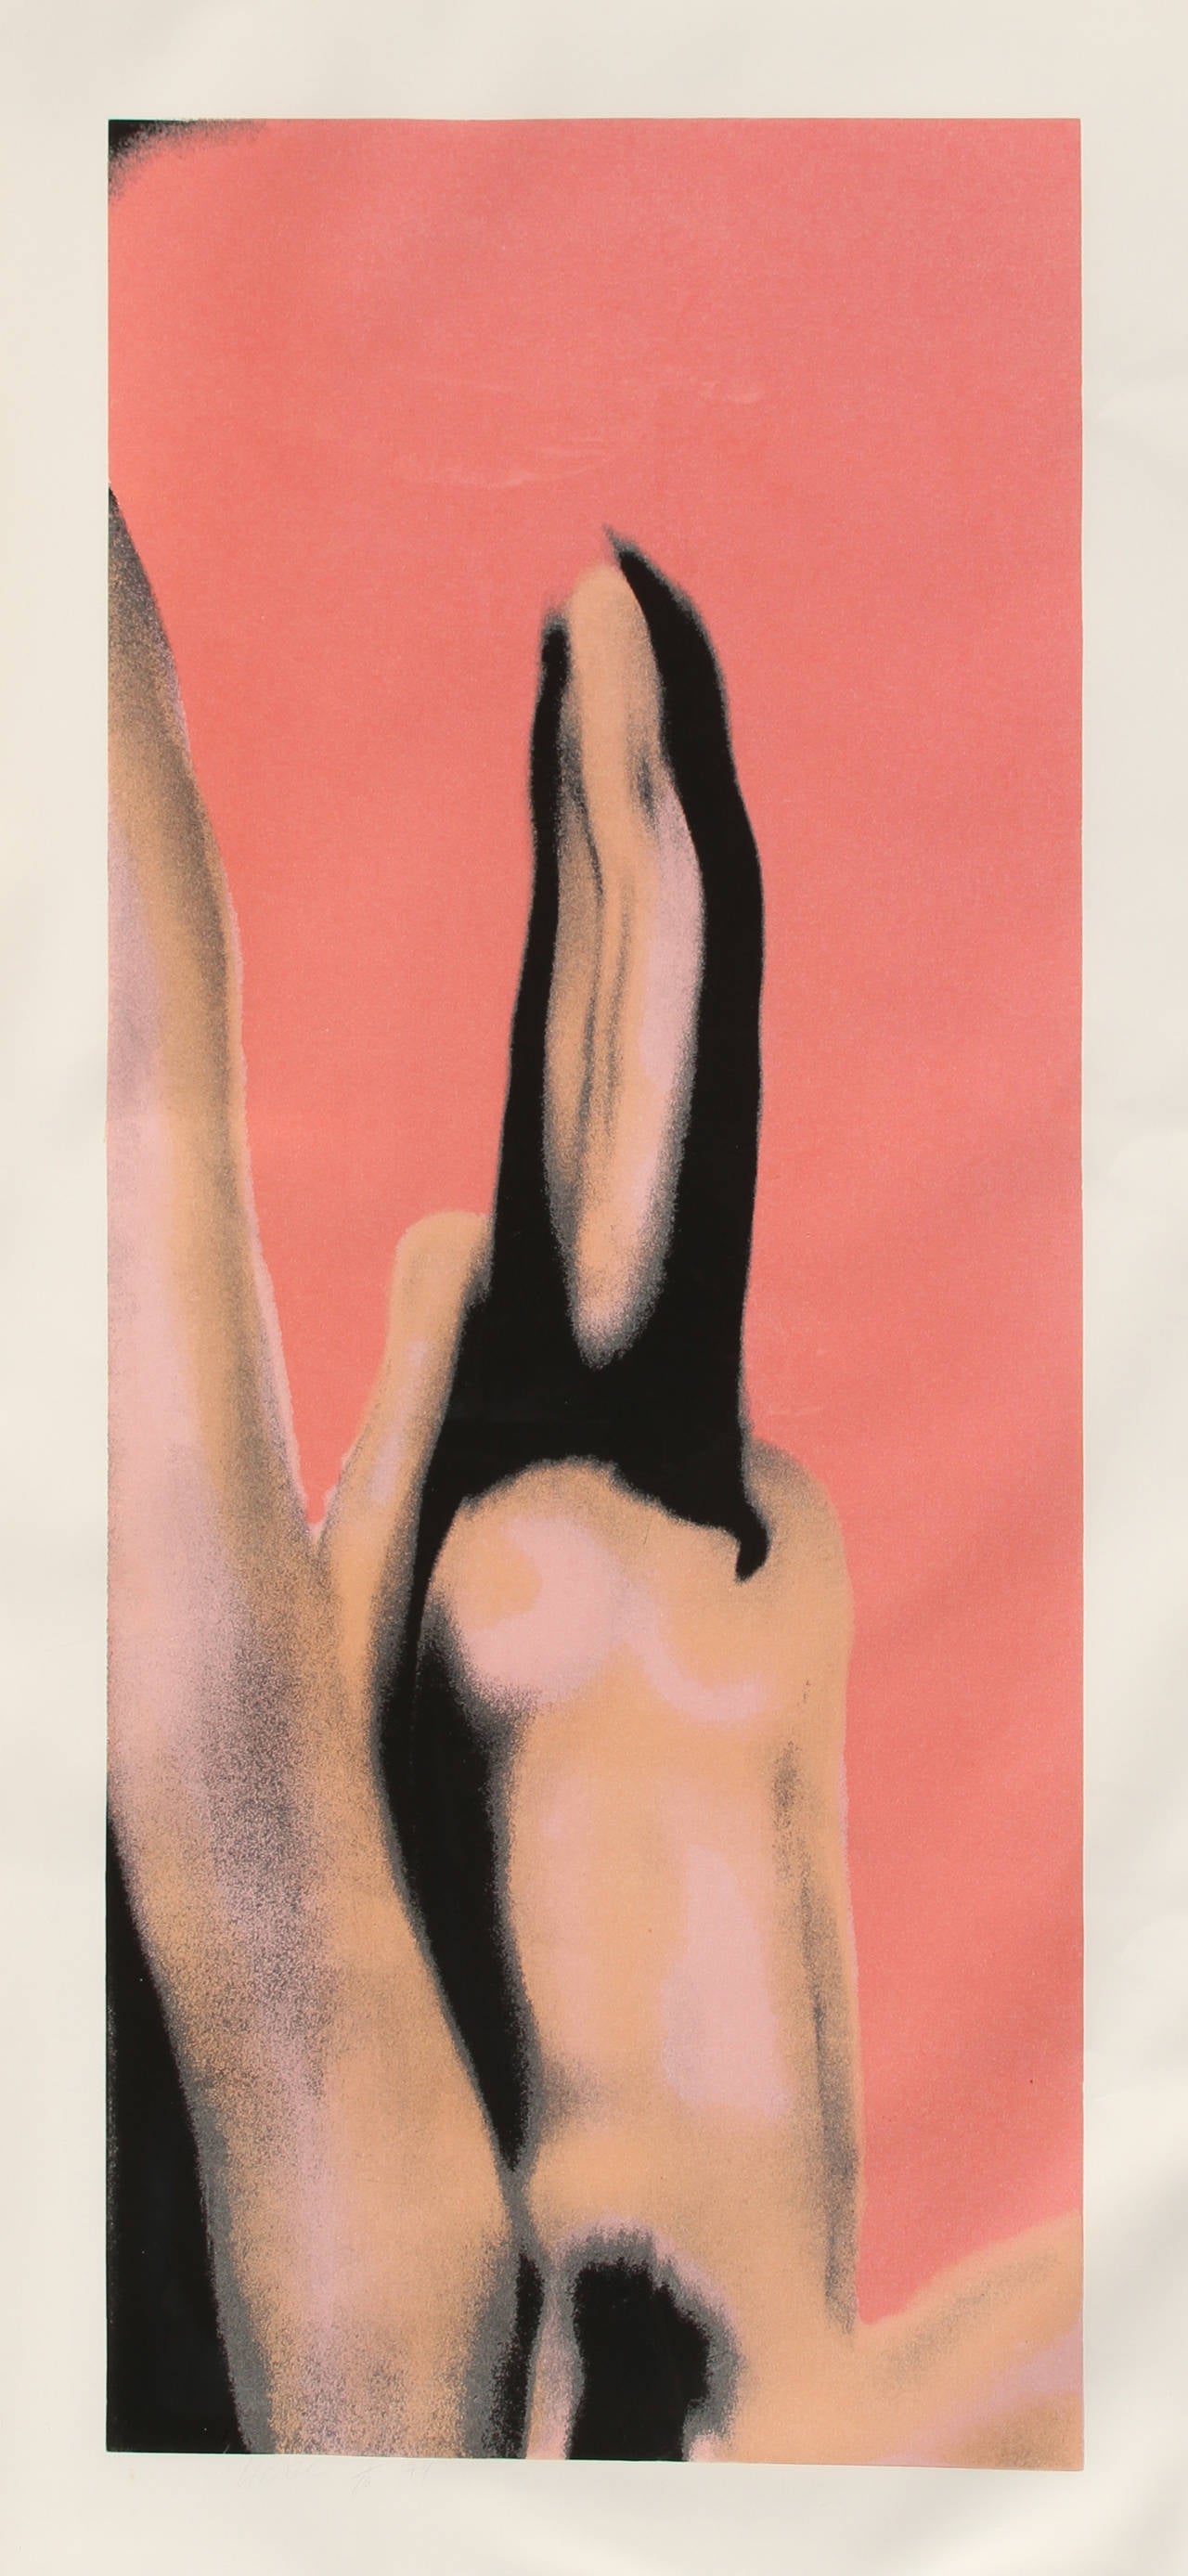 Larry Bell Nude Print - Nude 1